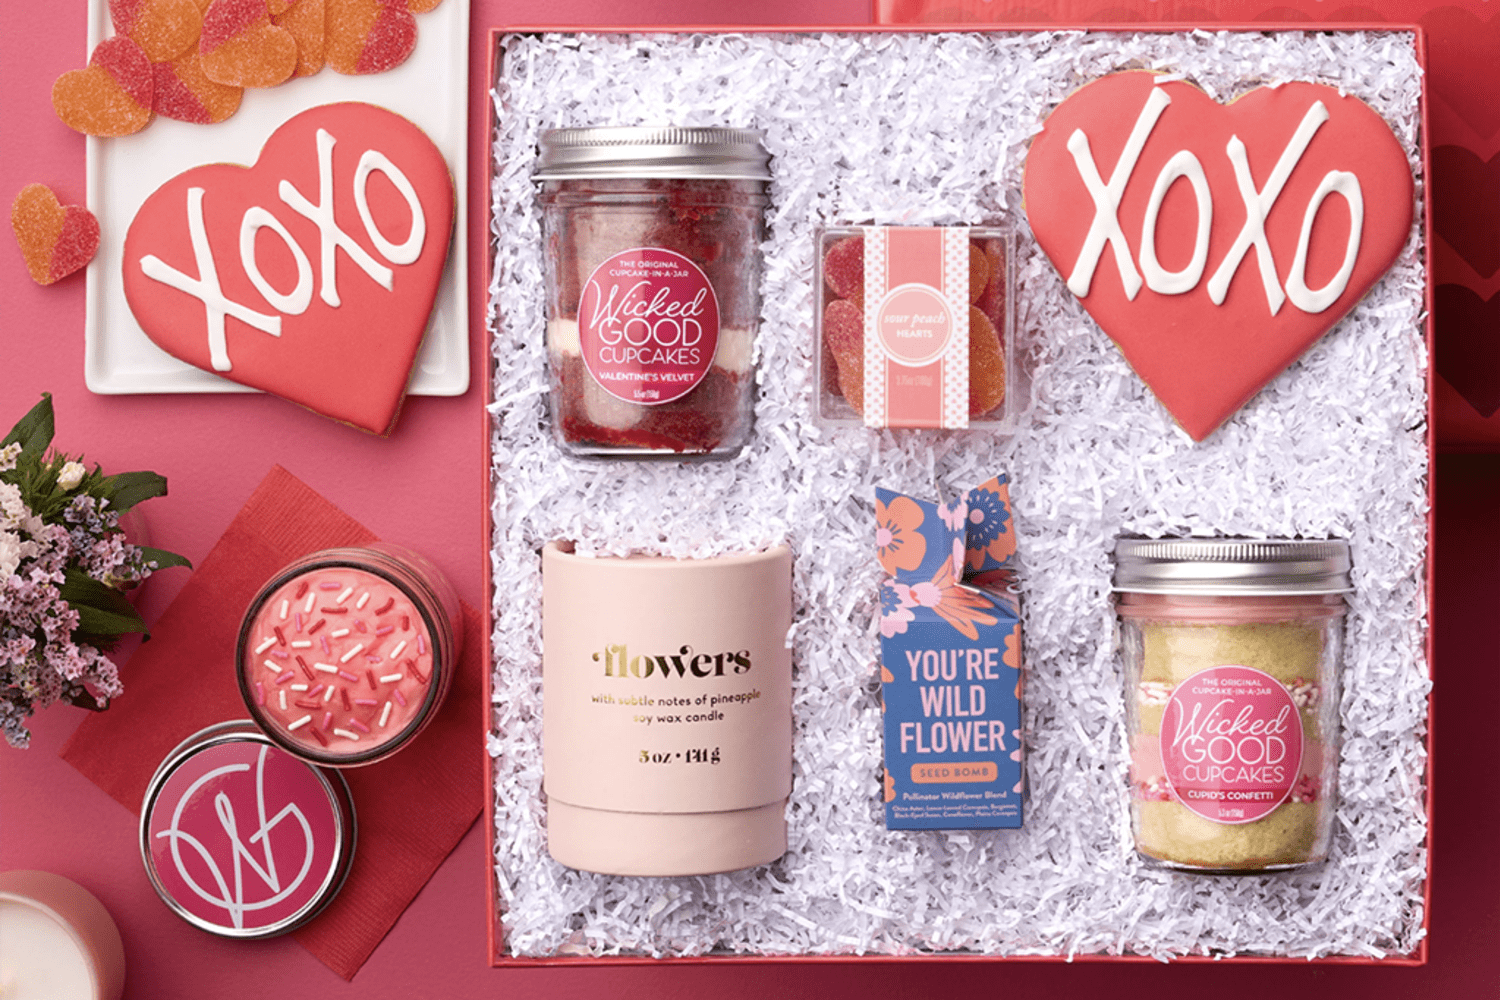 XOXO Pink Hearts Kitchen Mat